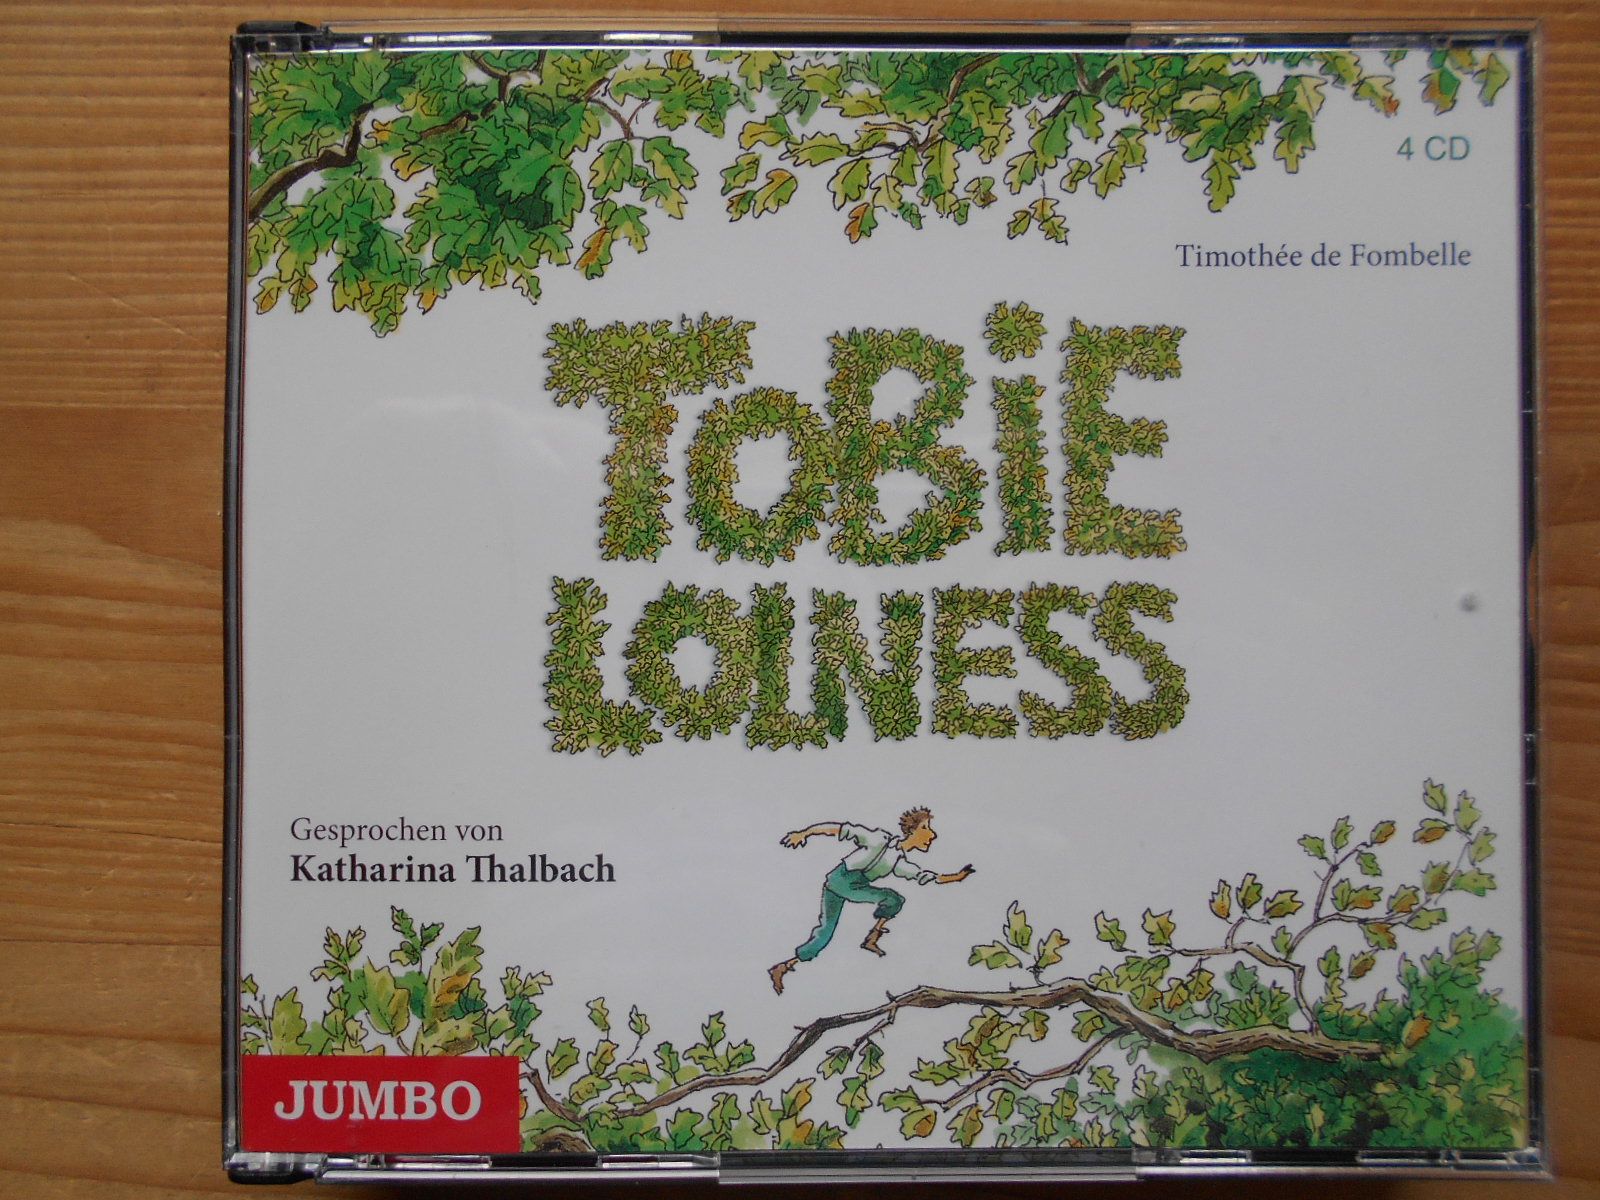 Tobie Lolness (4 CD) - de Fombelle, Timothée und Katharina Thalbach